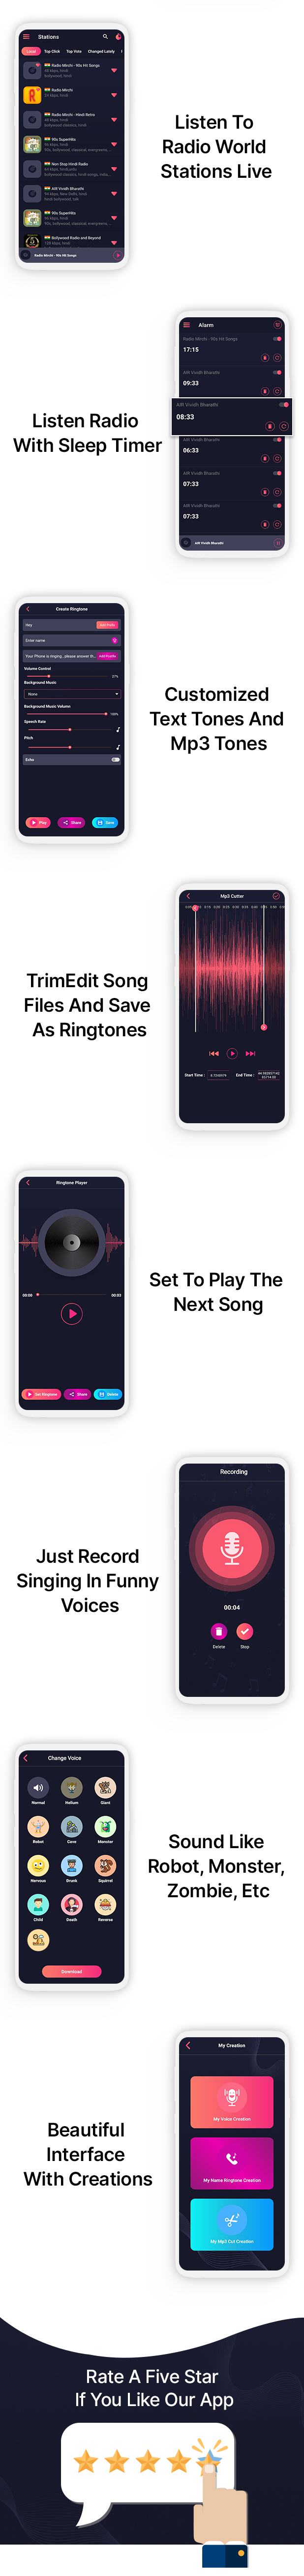 SangitGuru - Music Player, Ringtone Maker, Voice Recorder & Radio Streaming Android App - 7